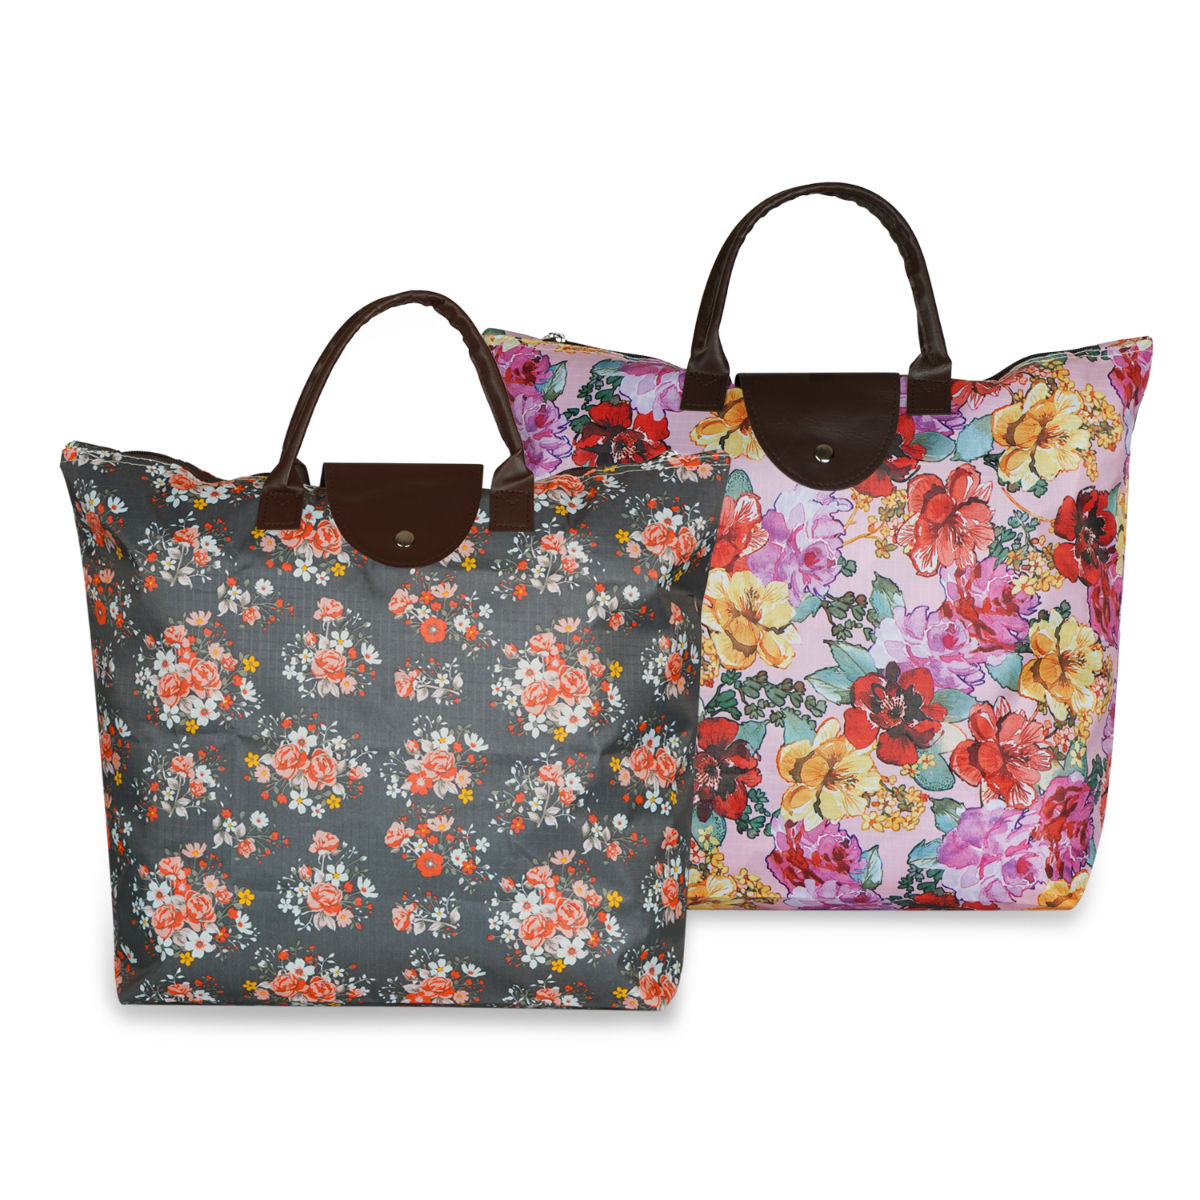 Buy NFI essentials Foldable Shopping Bag, Tote Bag Handbag Travel Bag Women  Shoulder Waterproof zipper Online